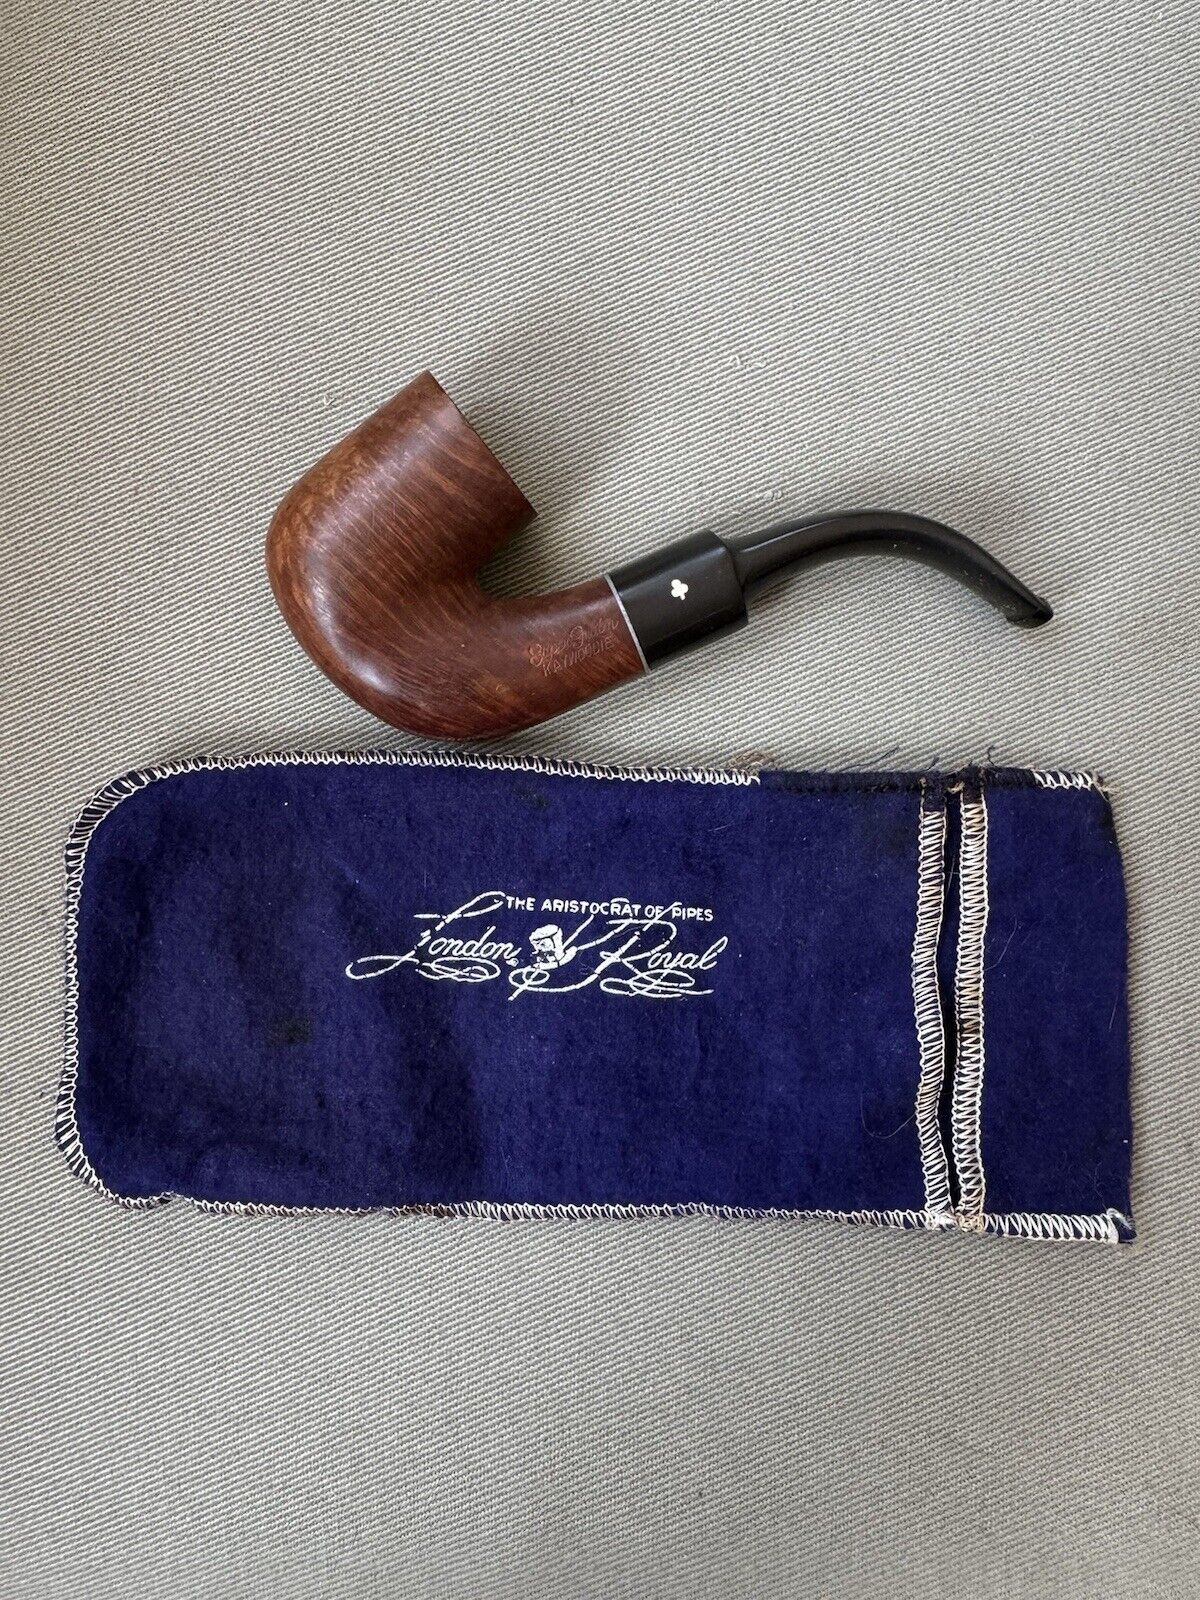 Vintage London Royal Super Grain Kaywoodie Tobacco Smoking Pipe and Cloth Bag